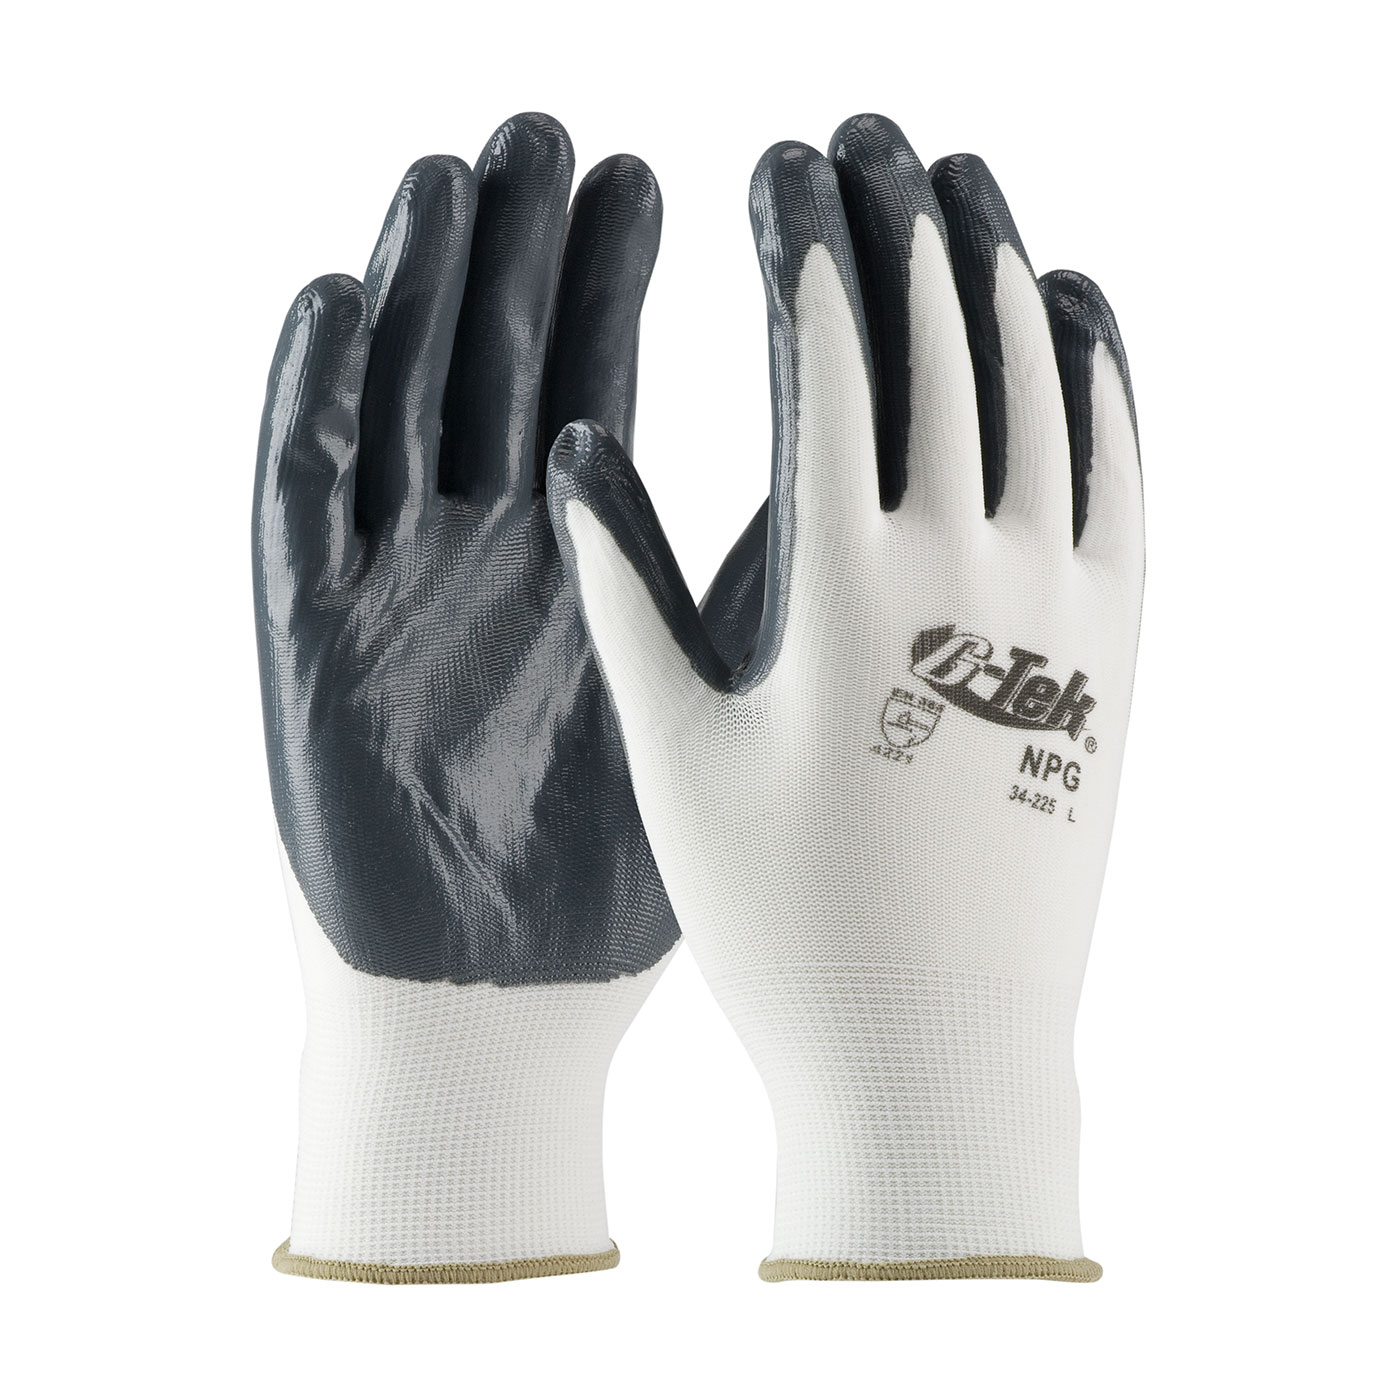 PIP 34-225/M G-Tek GP Seamless Knit Nylon Glove with Nitrile Coated Smooth Grip on Palm & Fingers - Medium PID-34 225 M